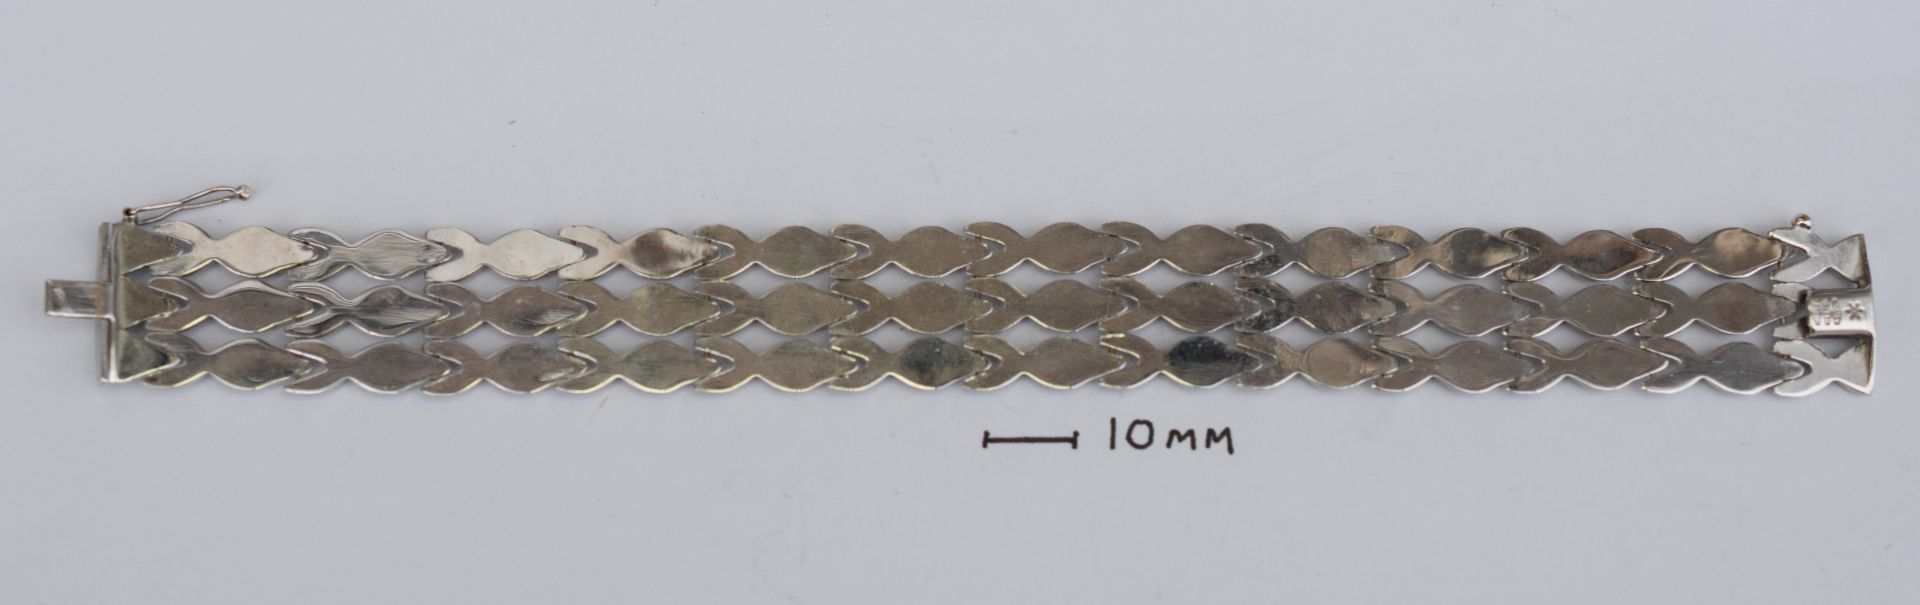 18ct White Gold Italian Bespoke Lady's Bracelet 27.5 grams - Image 6 of 8